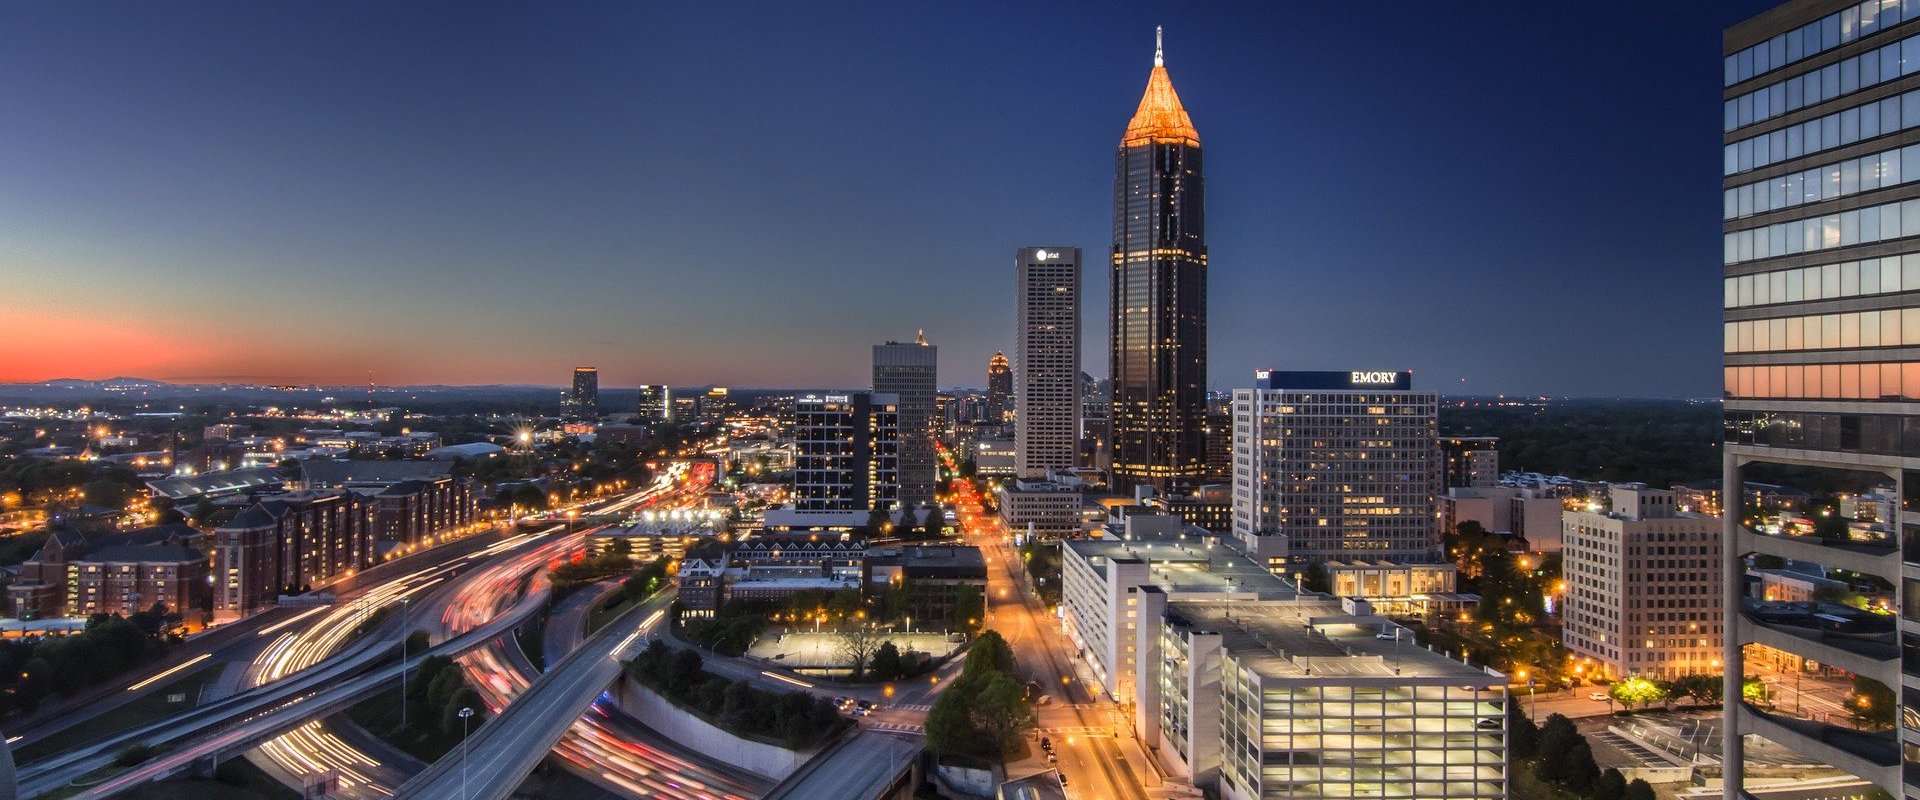 We Buy Houses Fast Atlanta Georgia - Sell My House Fast Atlanta Georgia